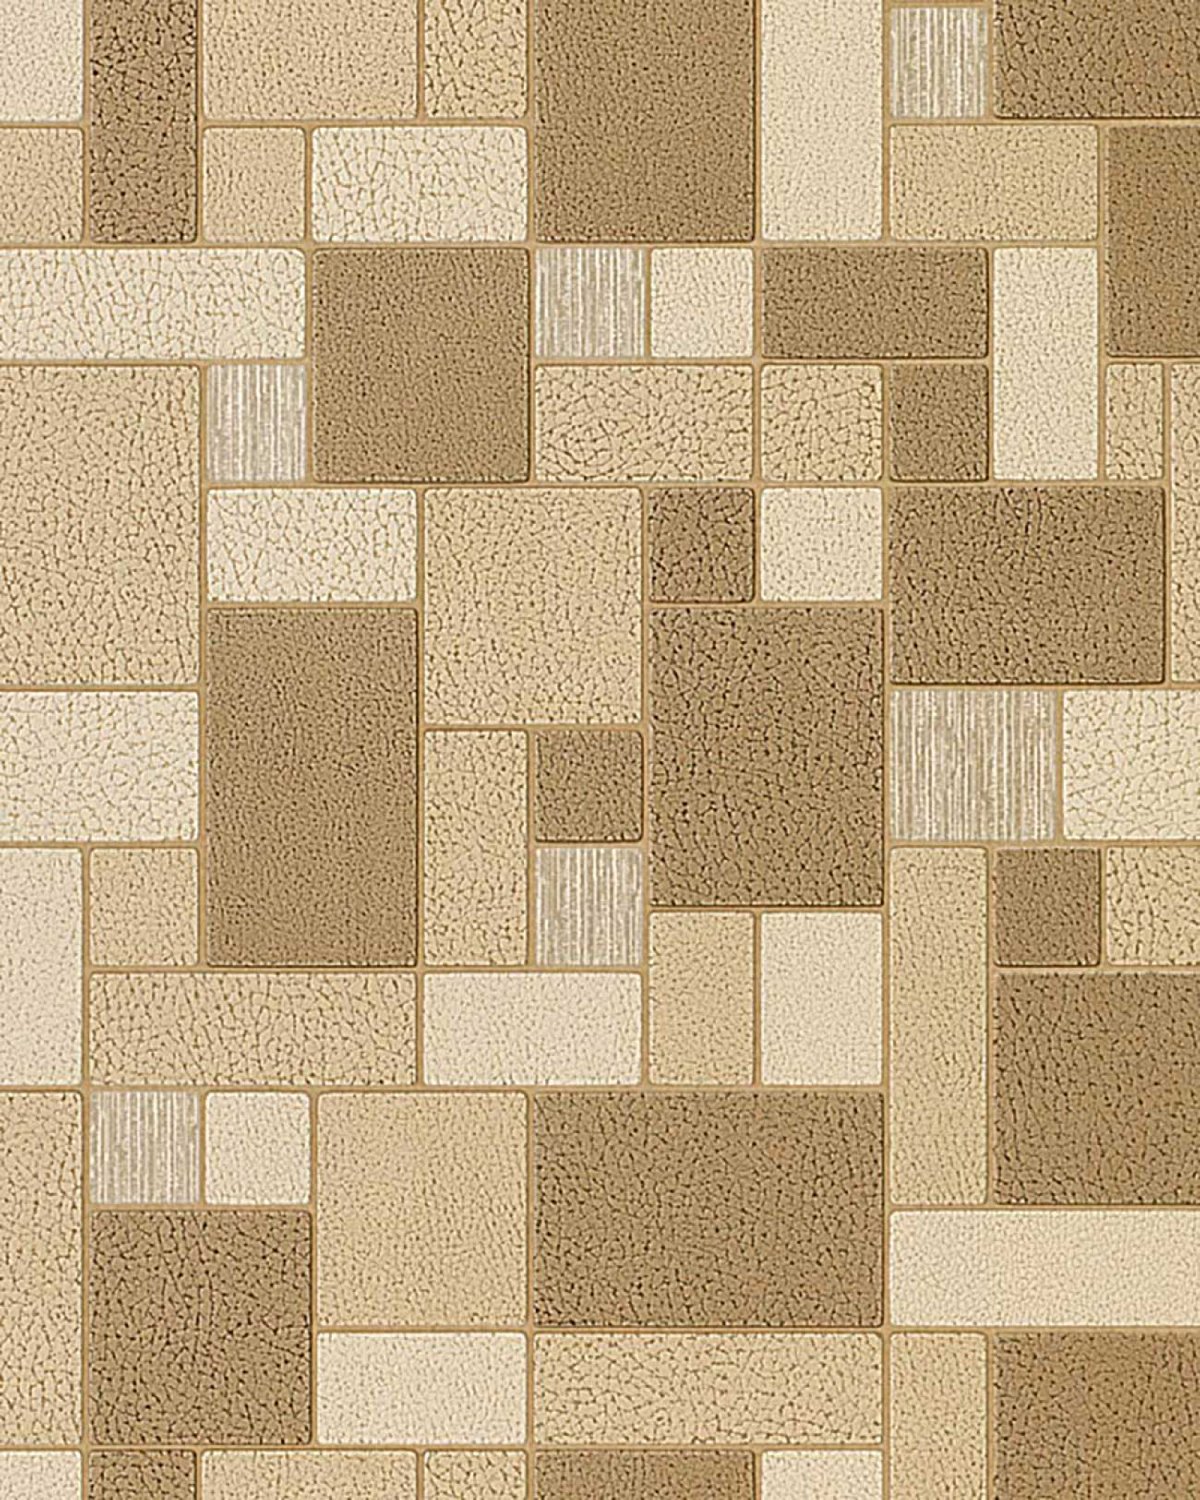 interior-floor-design-great-traventine-vinyl-mosaic-tiles-in-brown-color-scheme-terrific-home-interior-and-flooring-design-with-vinyl-mosaic-tiles